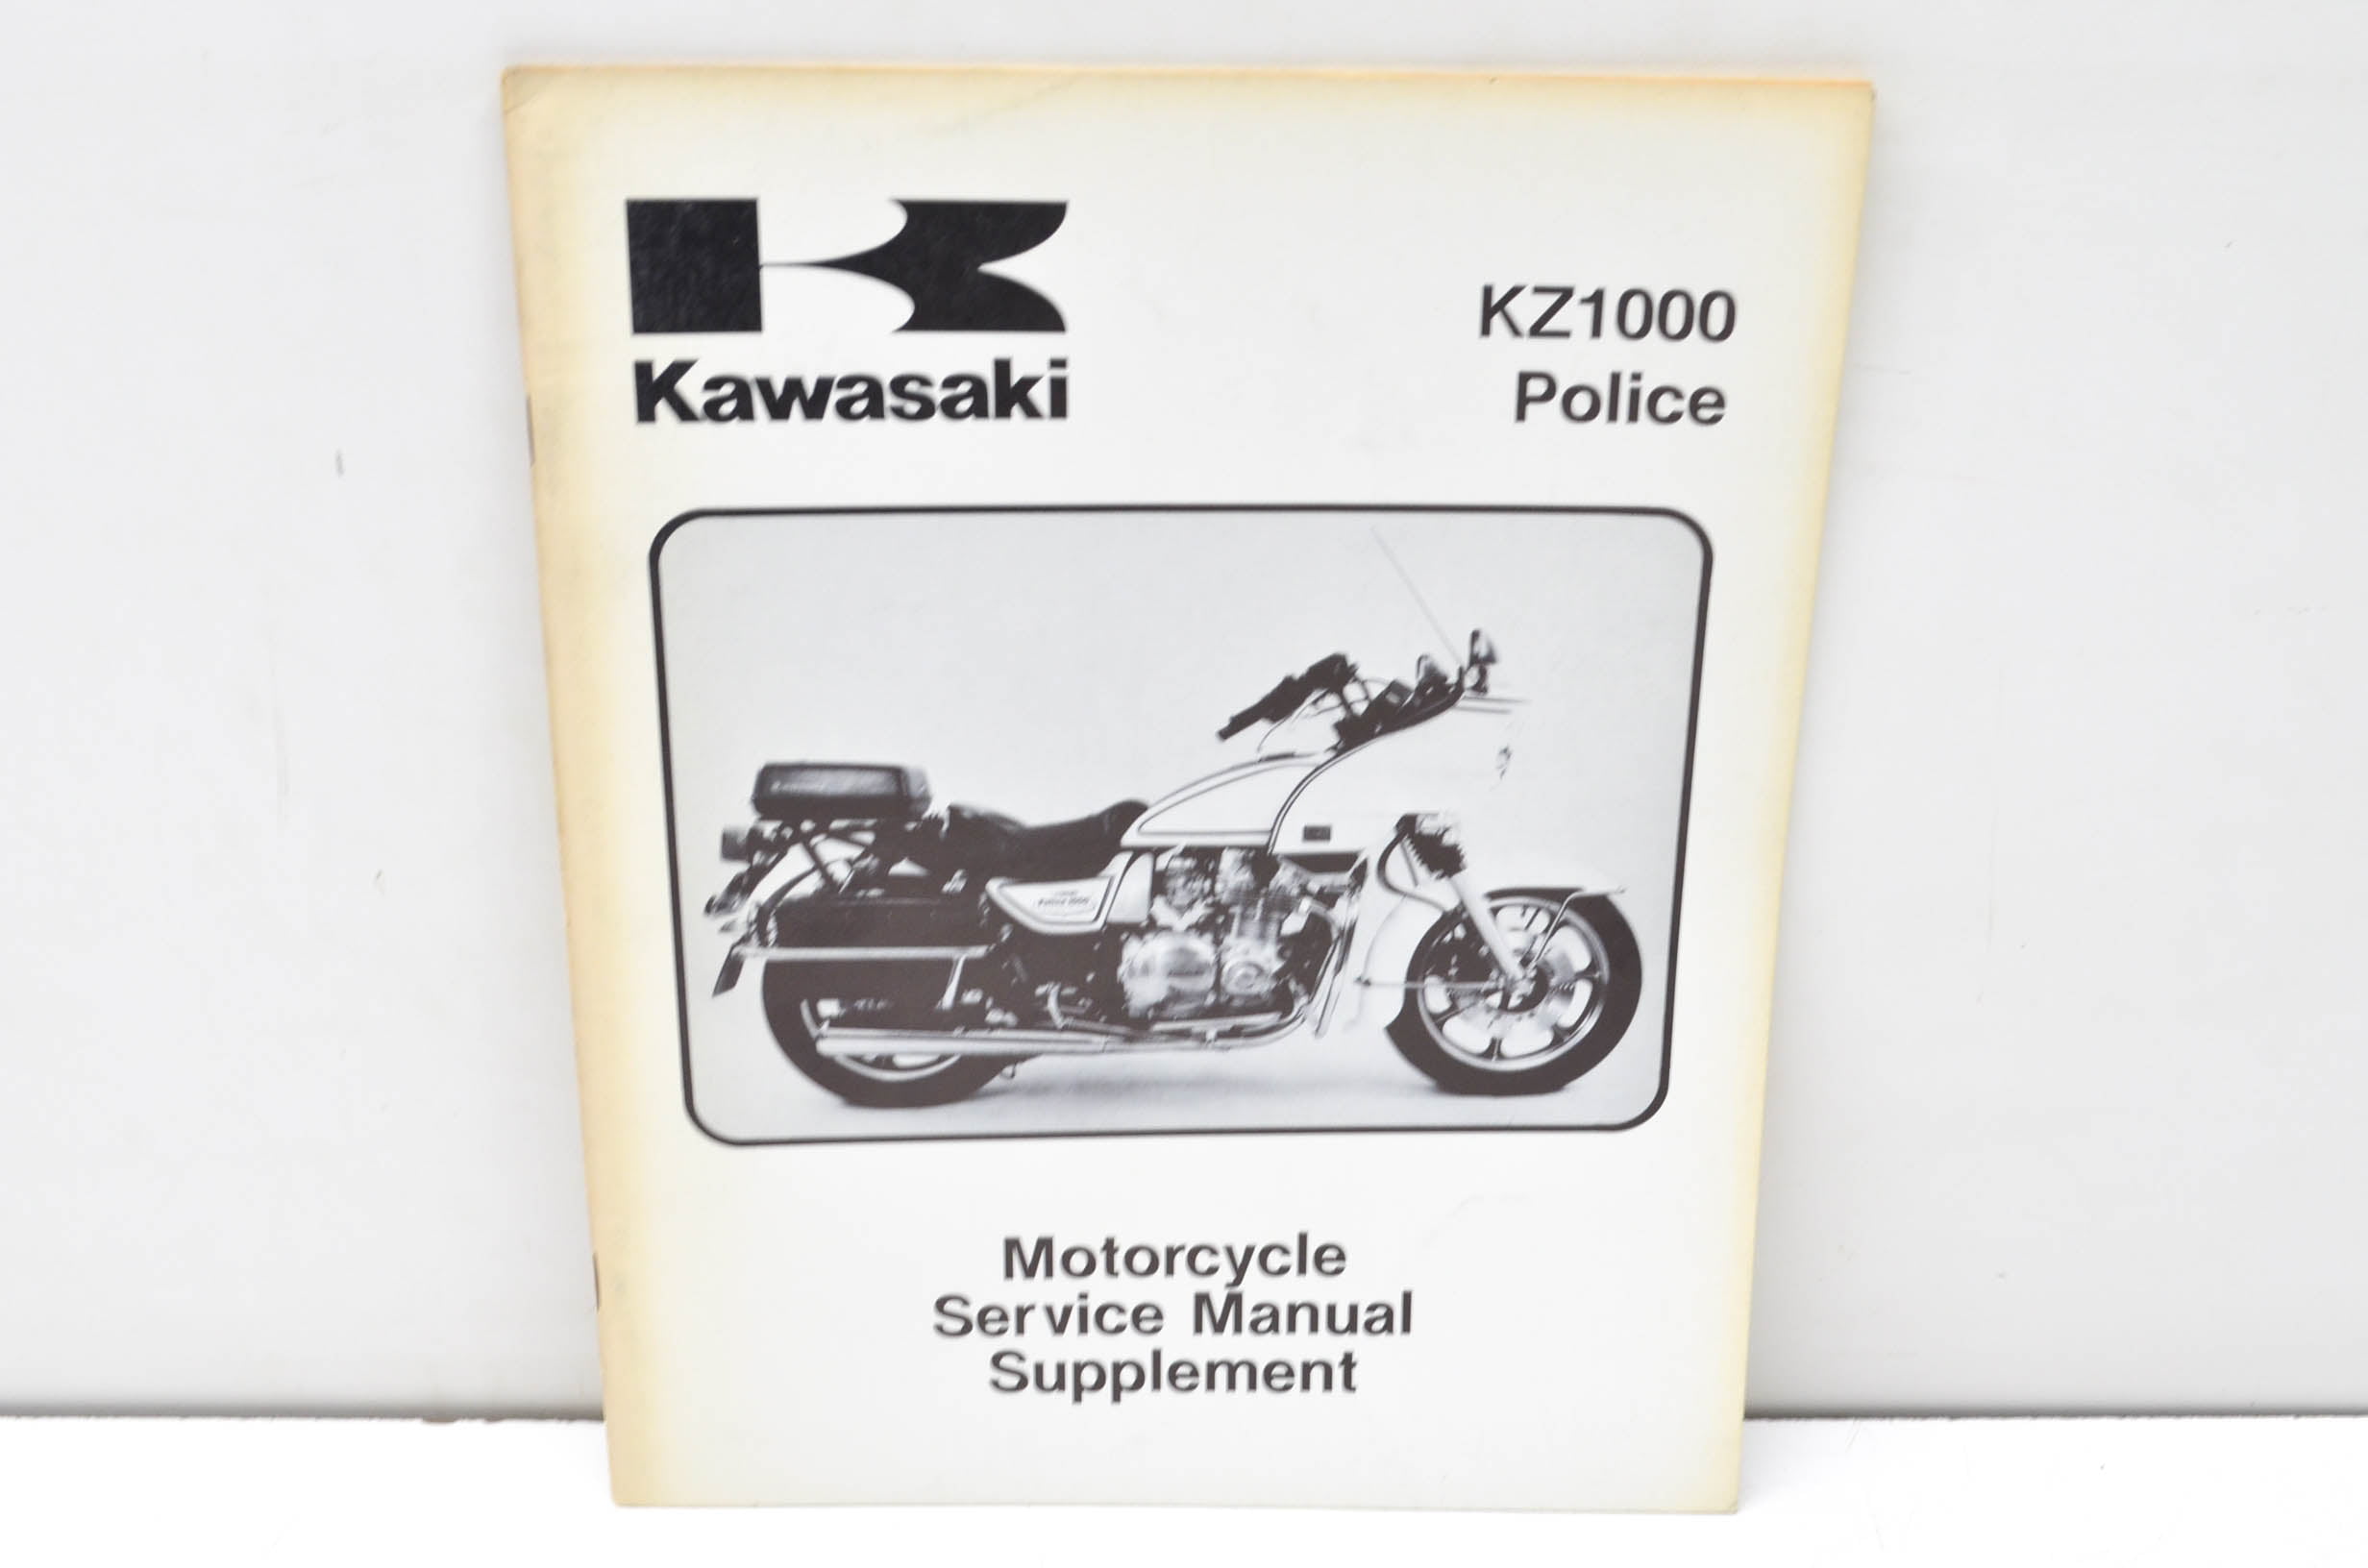 Kawasaki OEM 1982 KZ1000-P1 Police Service Manual Supplement 99963-0049-01 